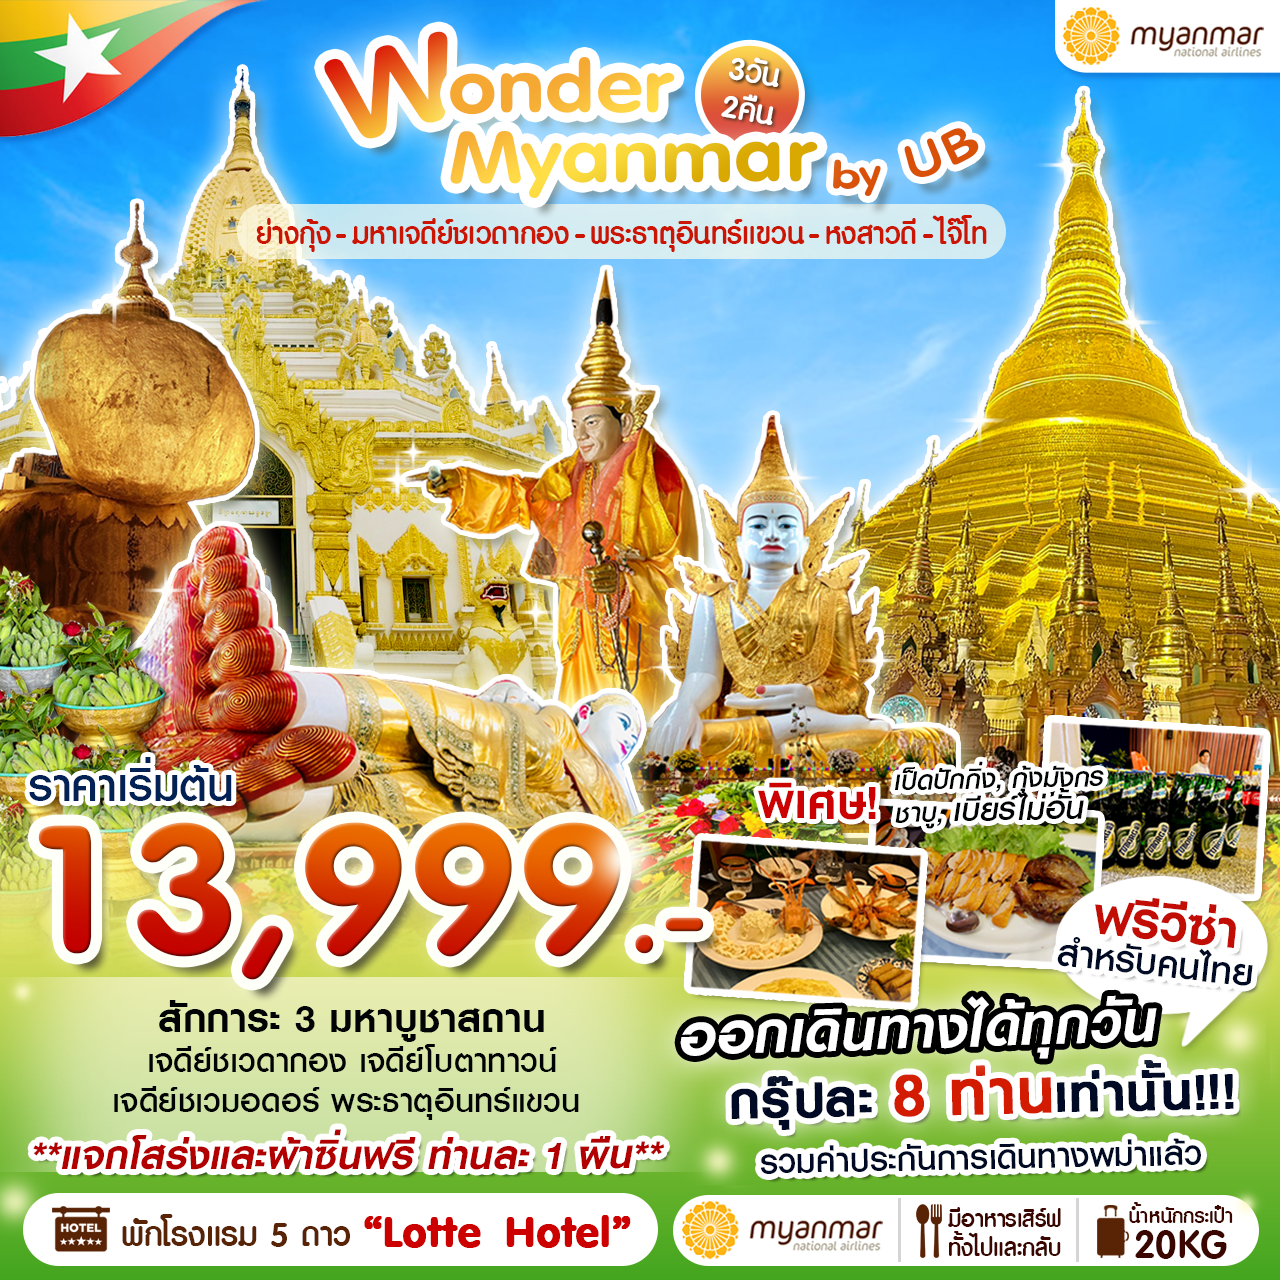 Wonder Myanmar by UB 3 DAYS 2 NIGHTS